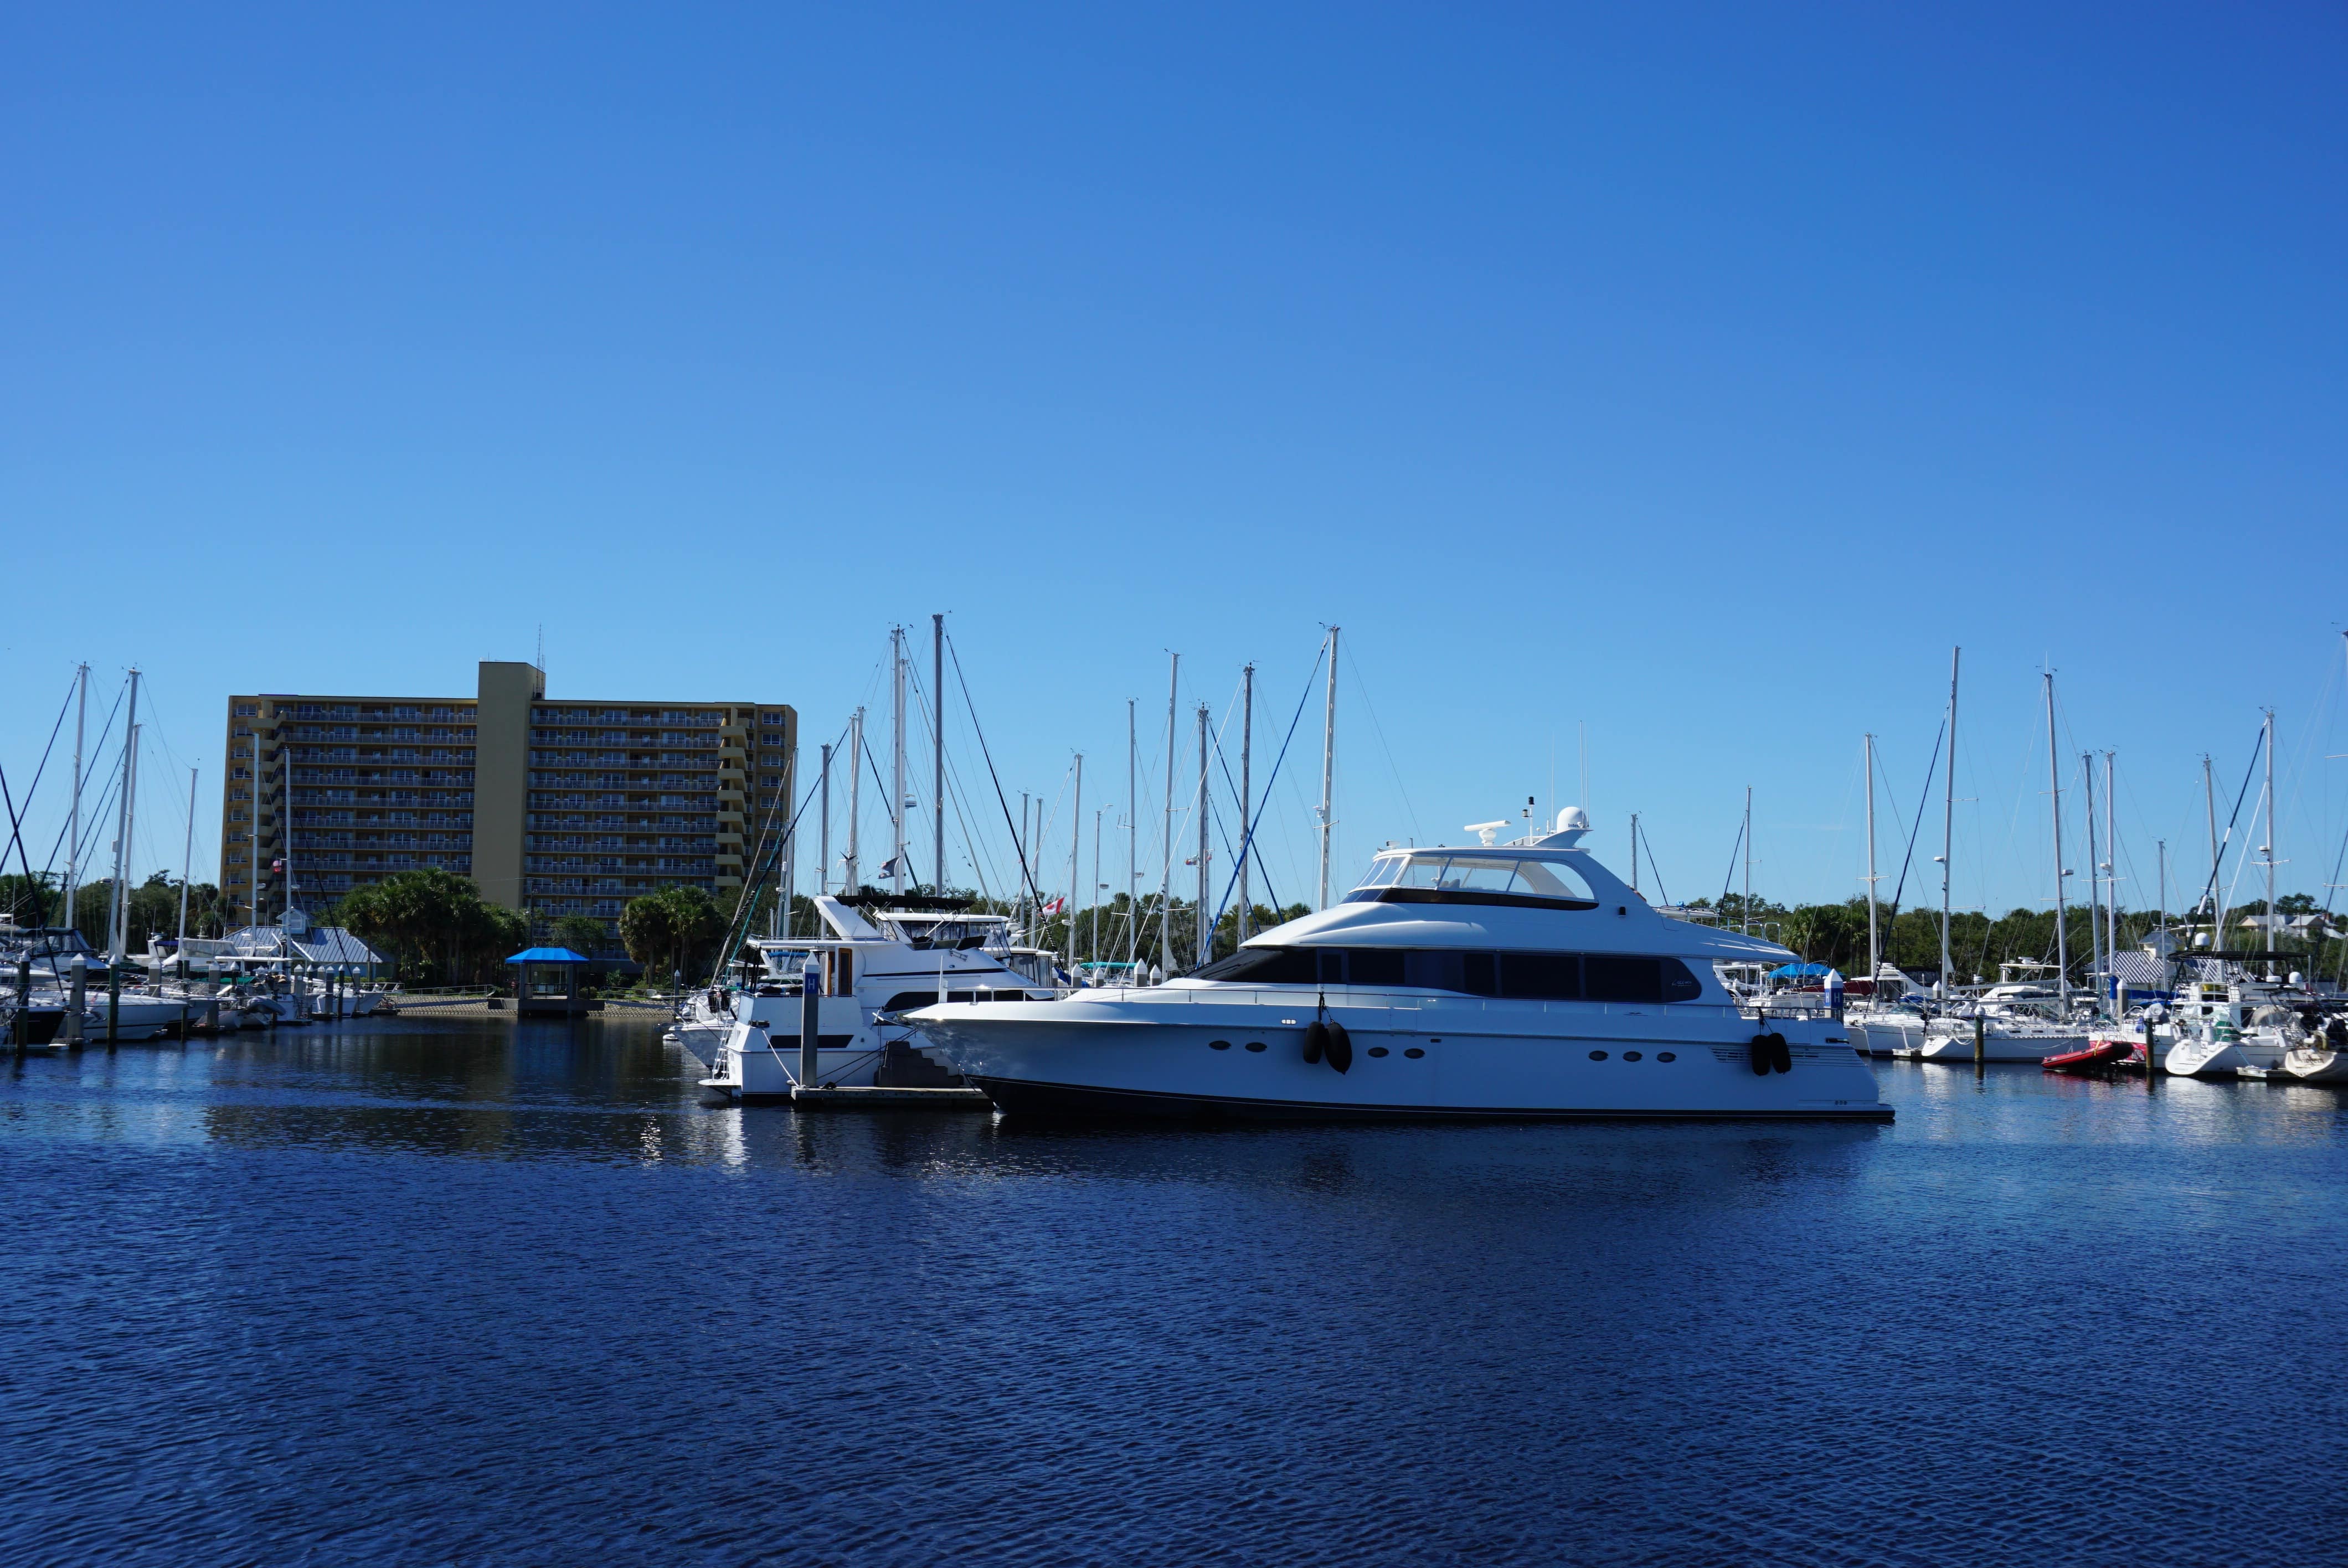 Central Florida Day Trip: Halifax Harbor Park and Marina